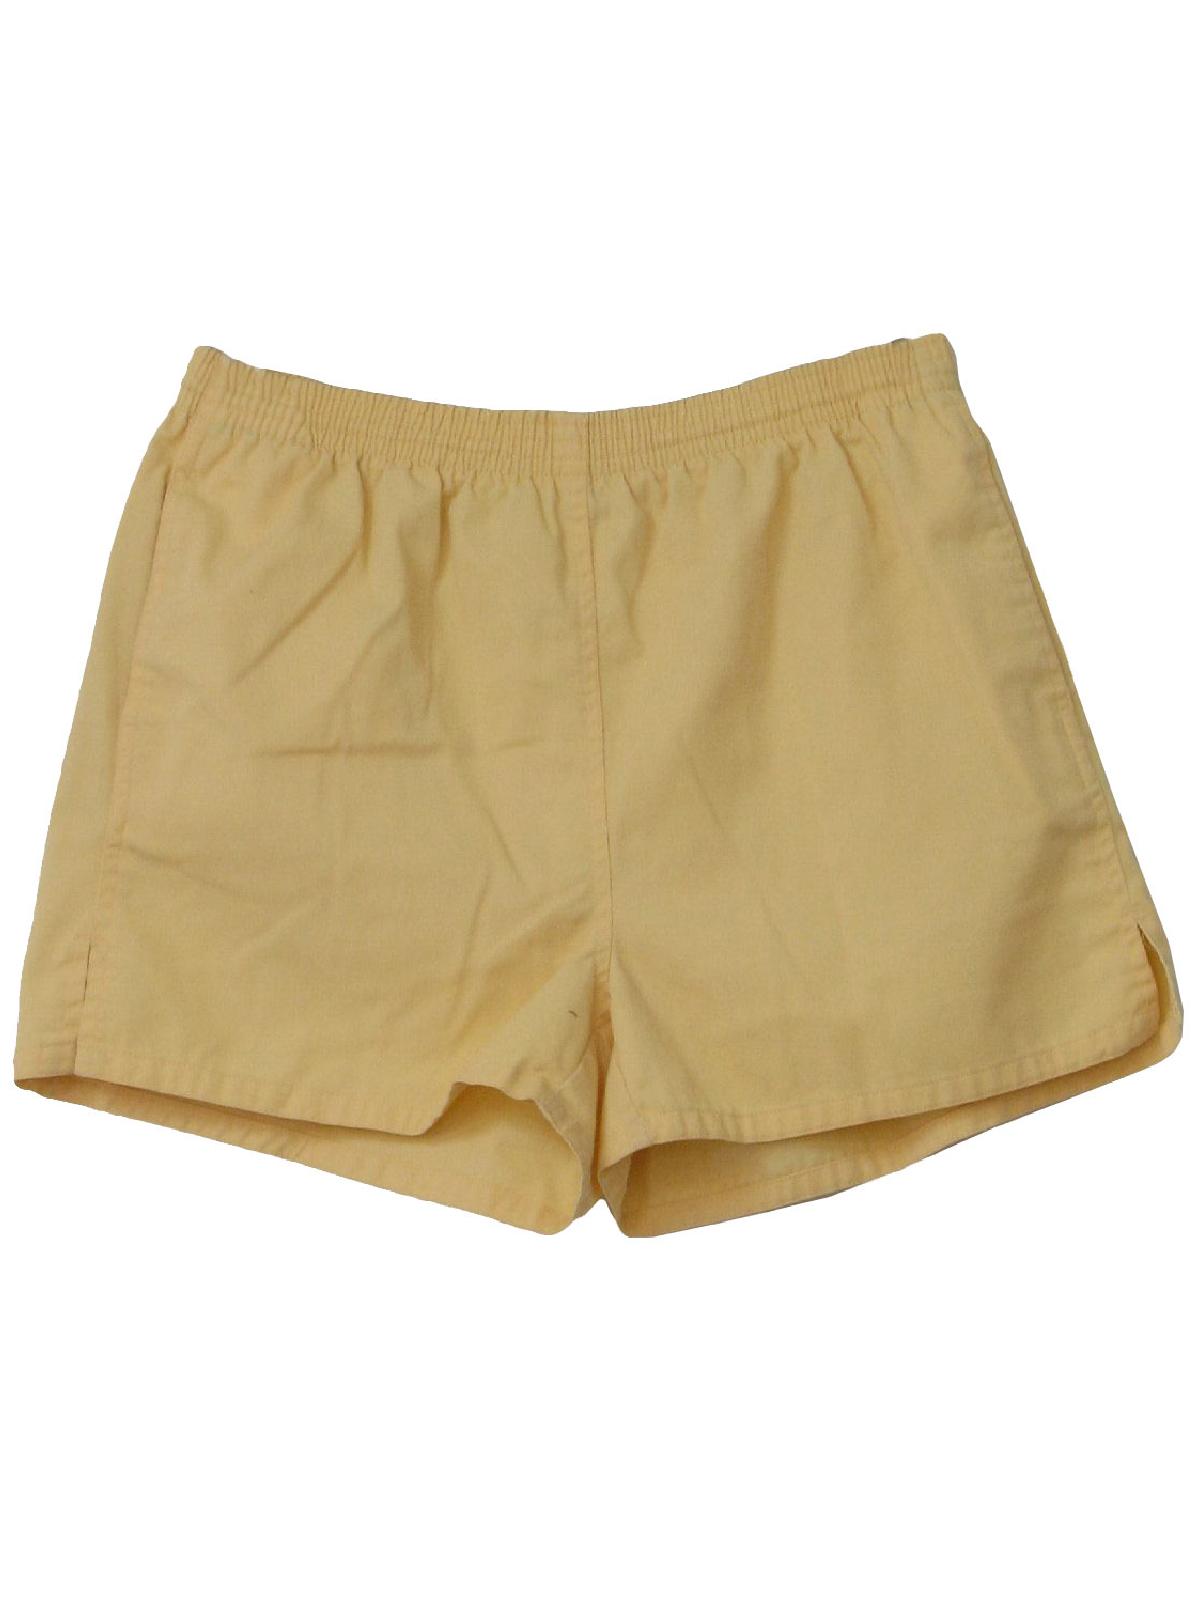 Retro Nineties Shorts: Late 80s -Honors Shorts- Mens dull yellow ...